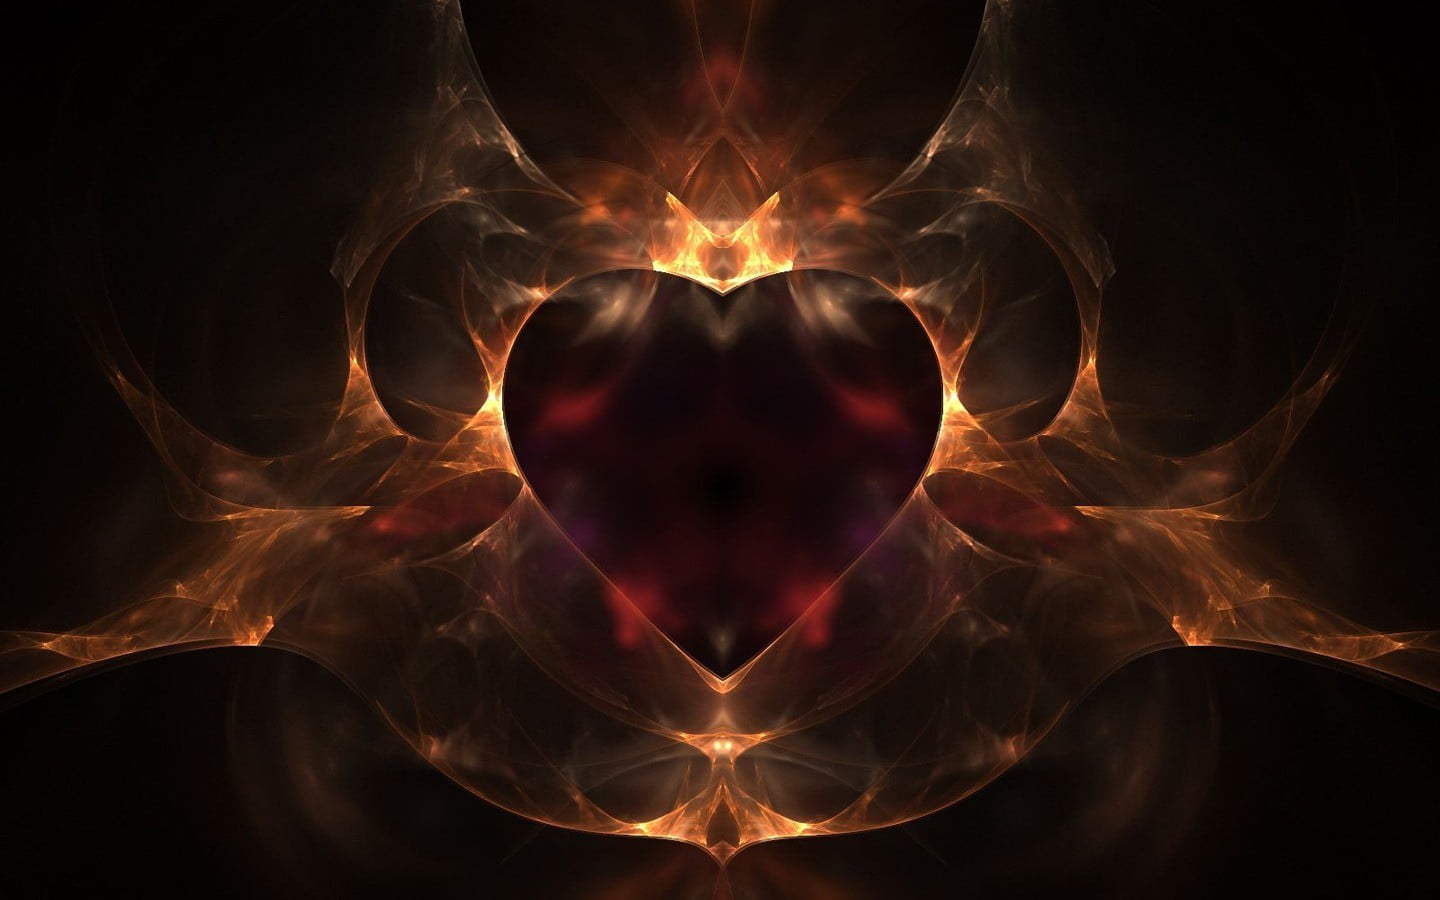 heart on fire illustration, digital art, red, close-up, black background